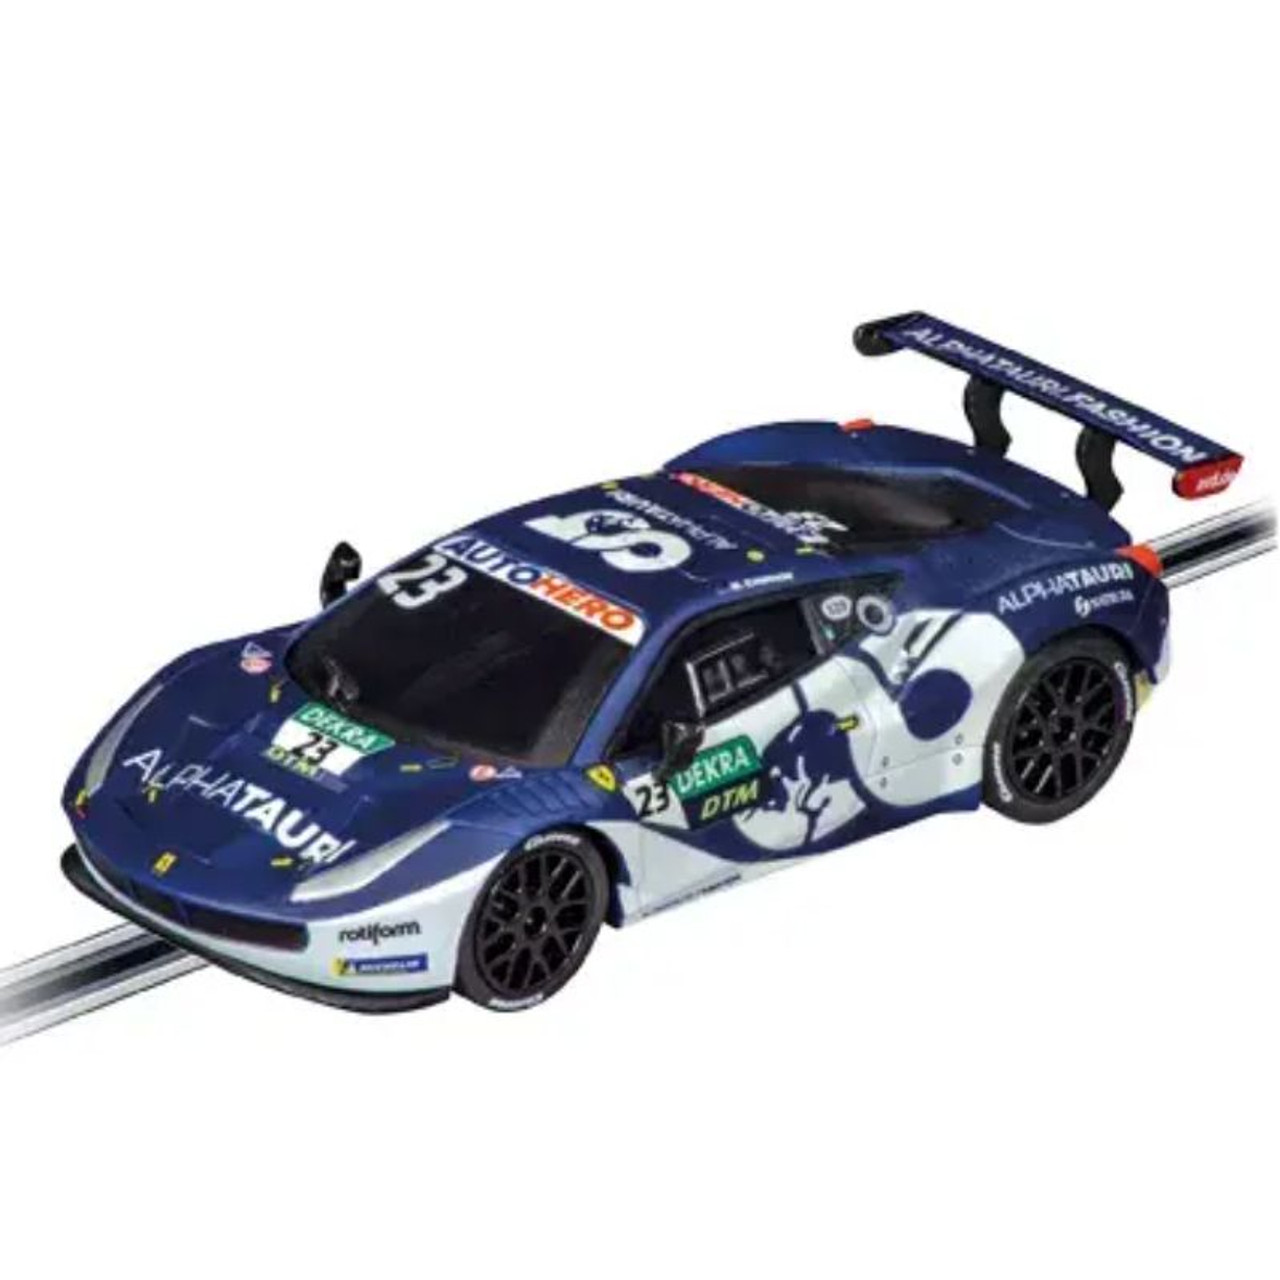 Carrera GO!!! 20062551 - Ferrari Pro Speeders Slot Car Racing Toy Set